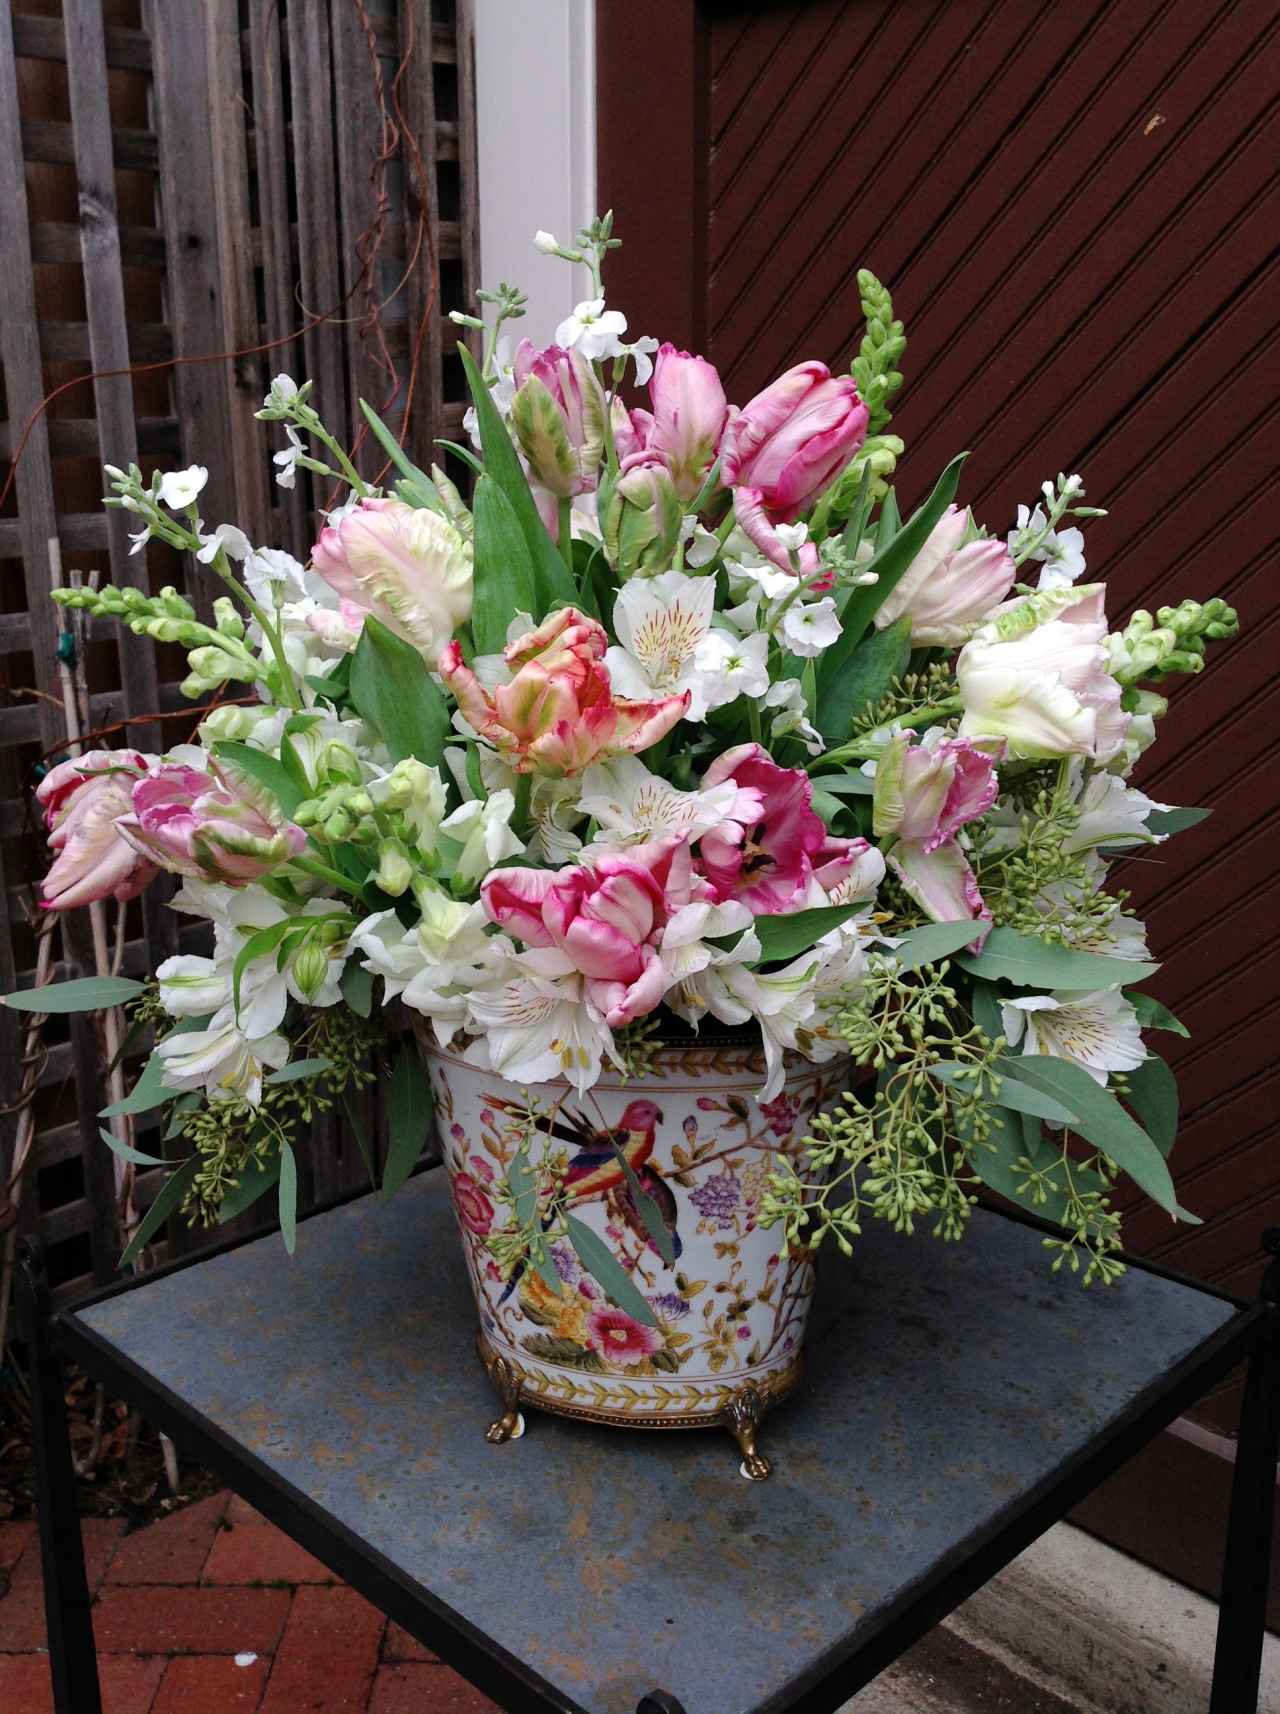 patriciaberl: âLush pink, creme, and green parrot tulips create an elegant arrangement in a classic french vase. April 2014. â